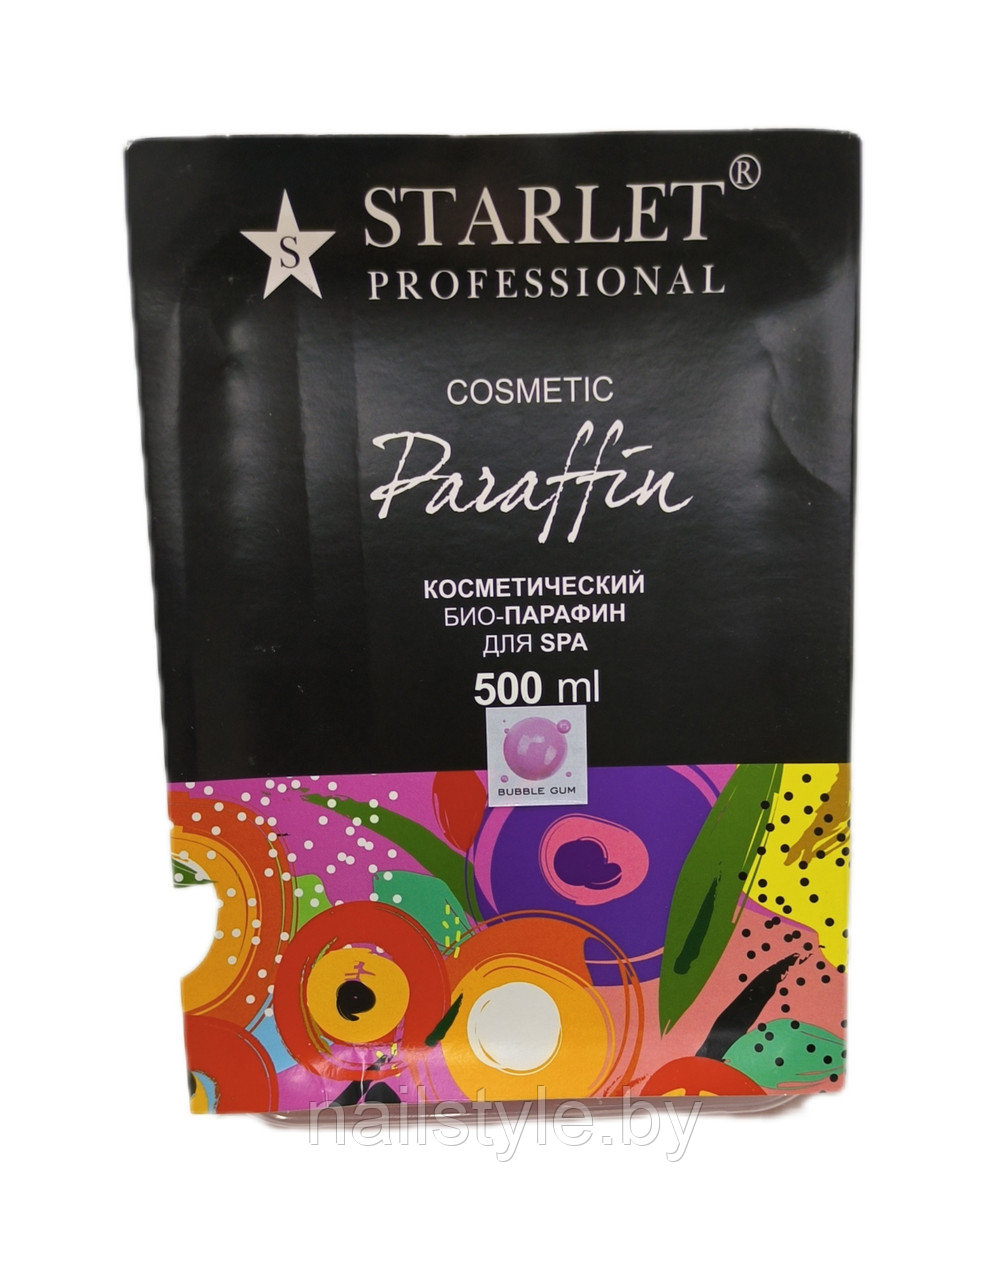 Био-Парафин косметический  Starlet  Professional SPA PARAFFIN со вкусом Bubble Gum 500мл (450 гр)